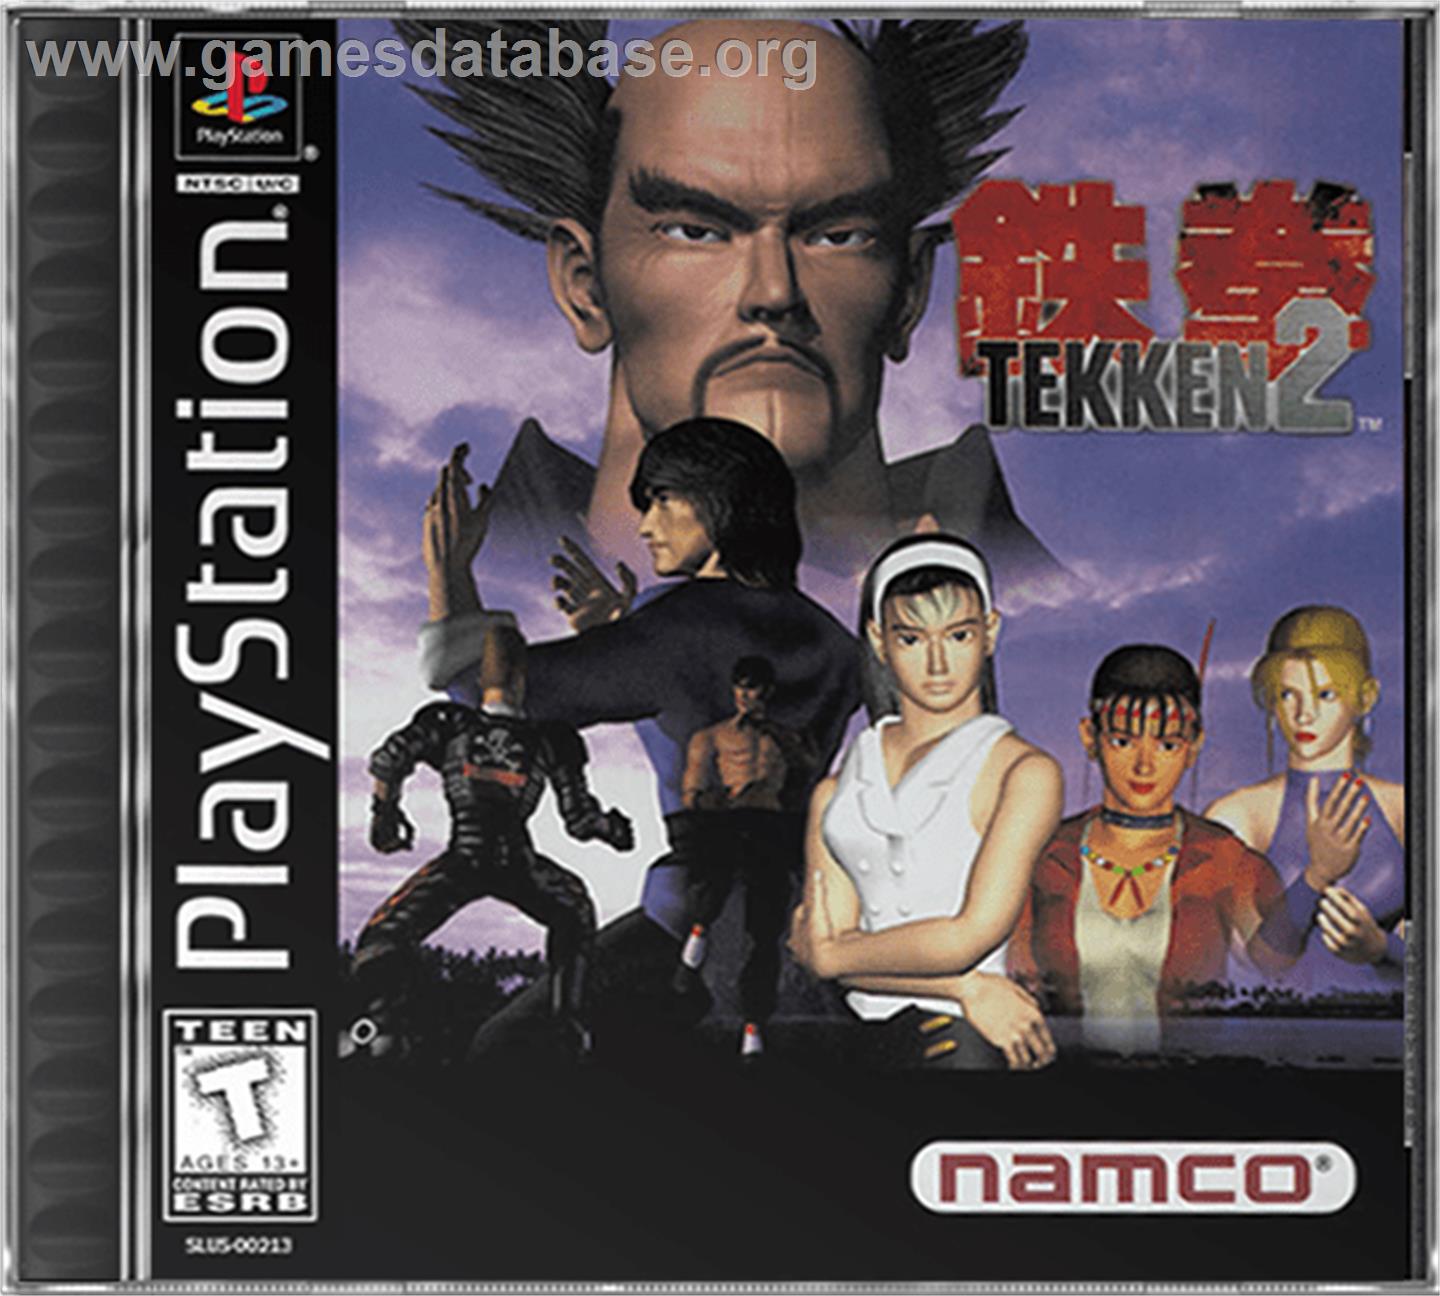 Tekken 2 / Soul Blade - Sony Playstation - Artwork - Box